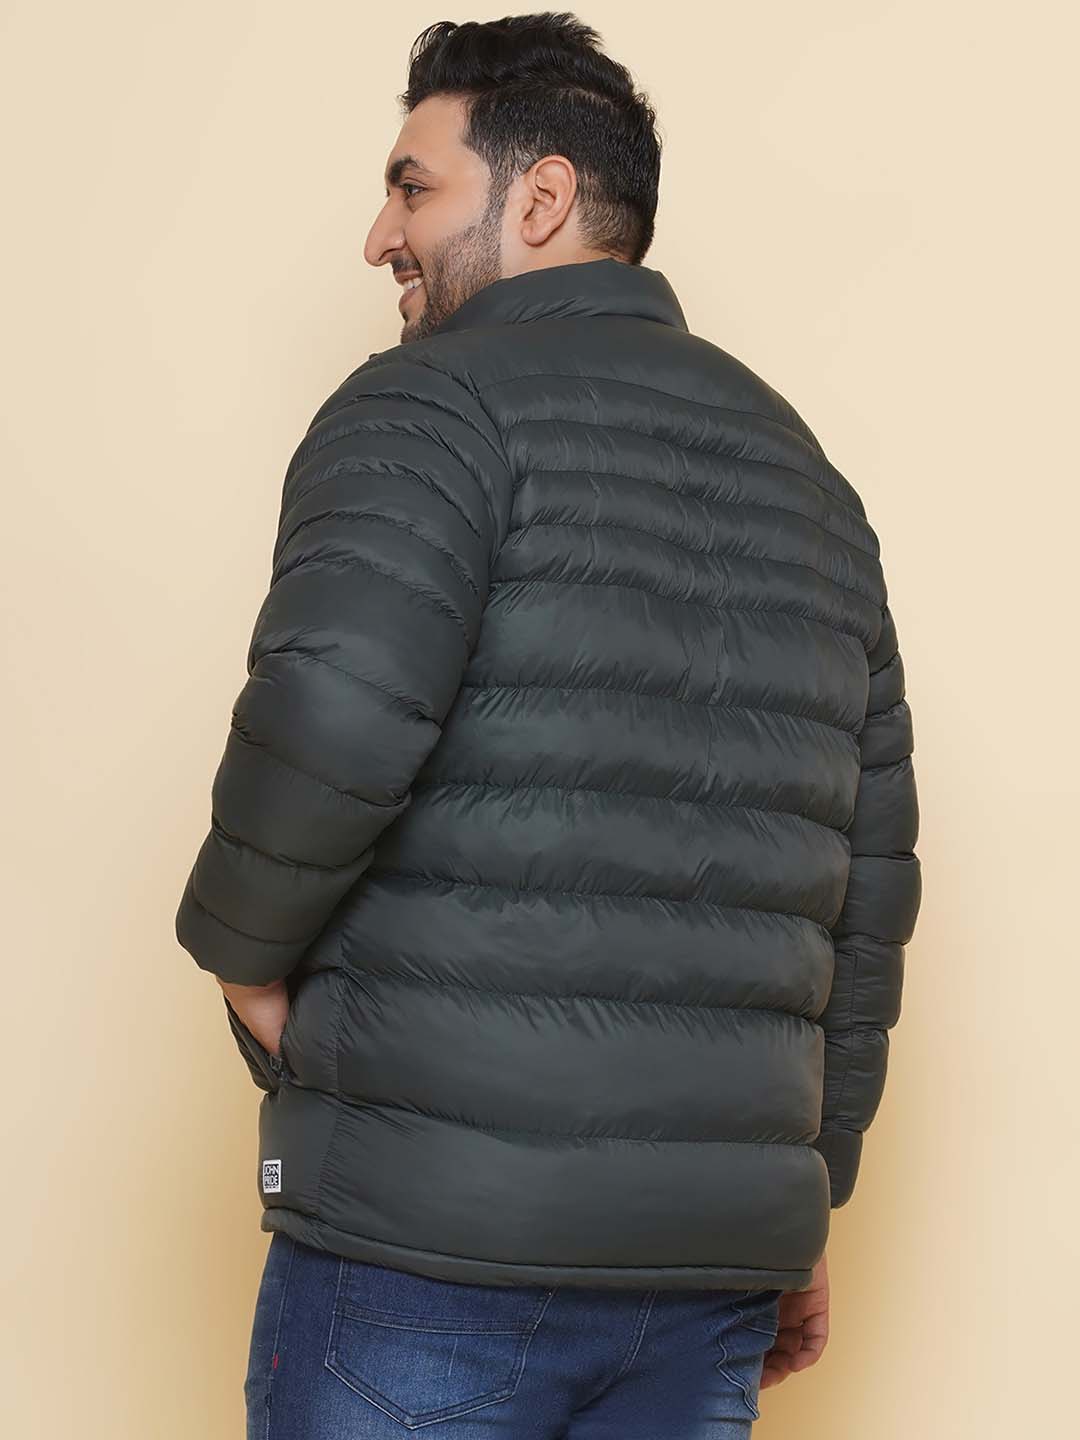 winterwear/jackets/JPJKT73083B/jpjkt73083b-5.jpg